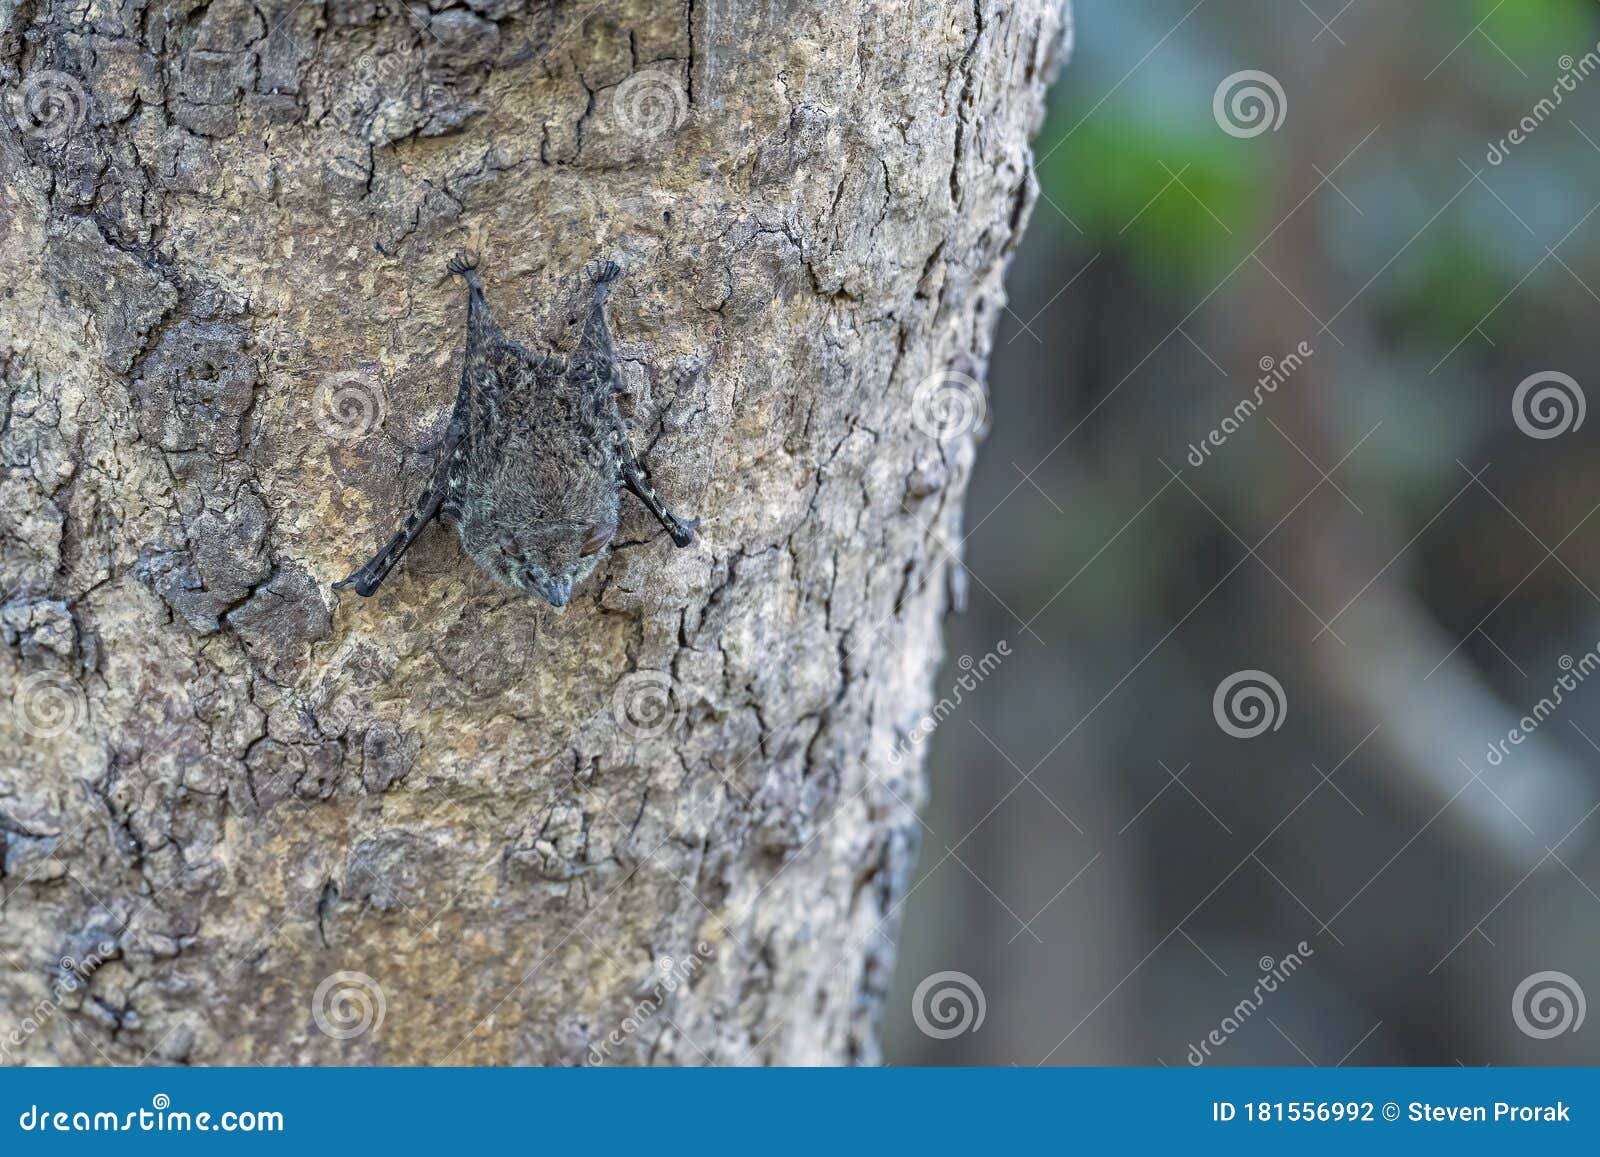 proboscis bat resting in the daytime